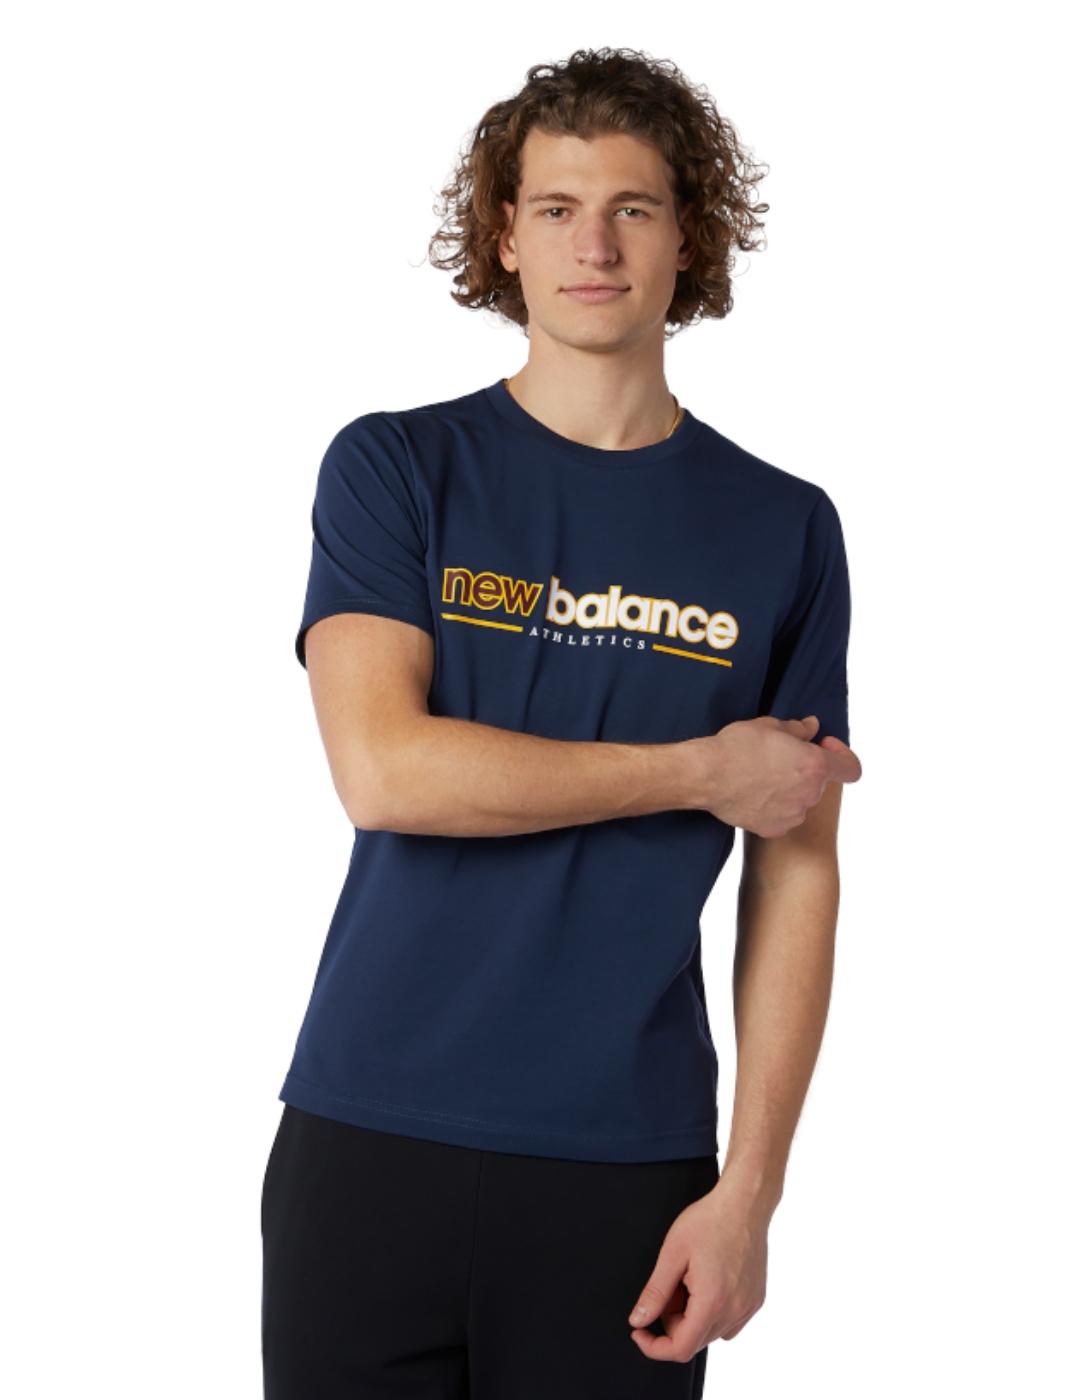 camiseta new balance athletics marino de hombre.